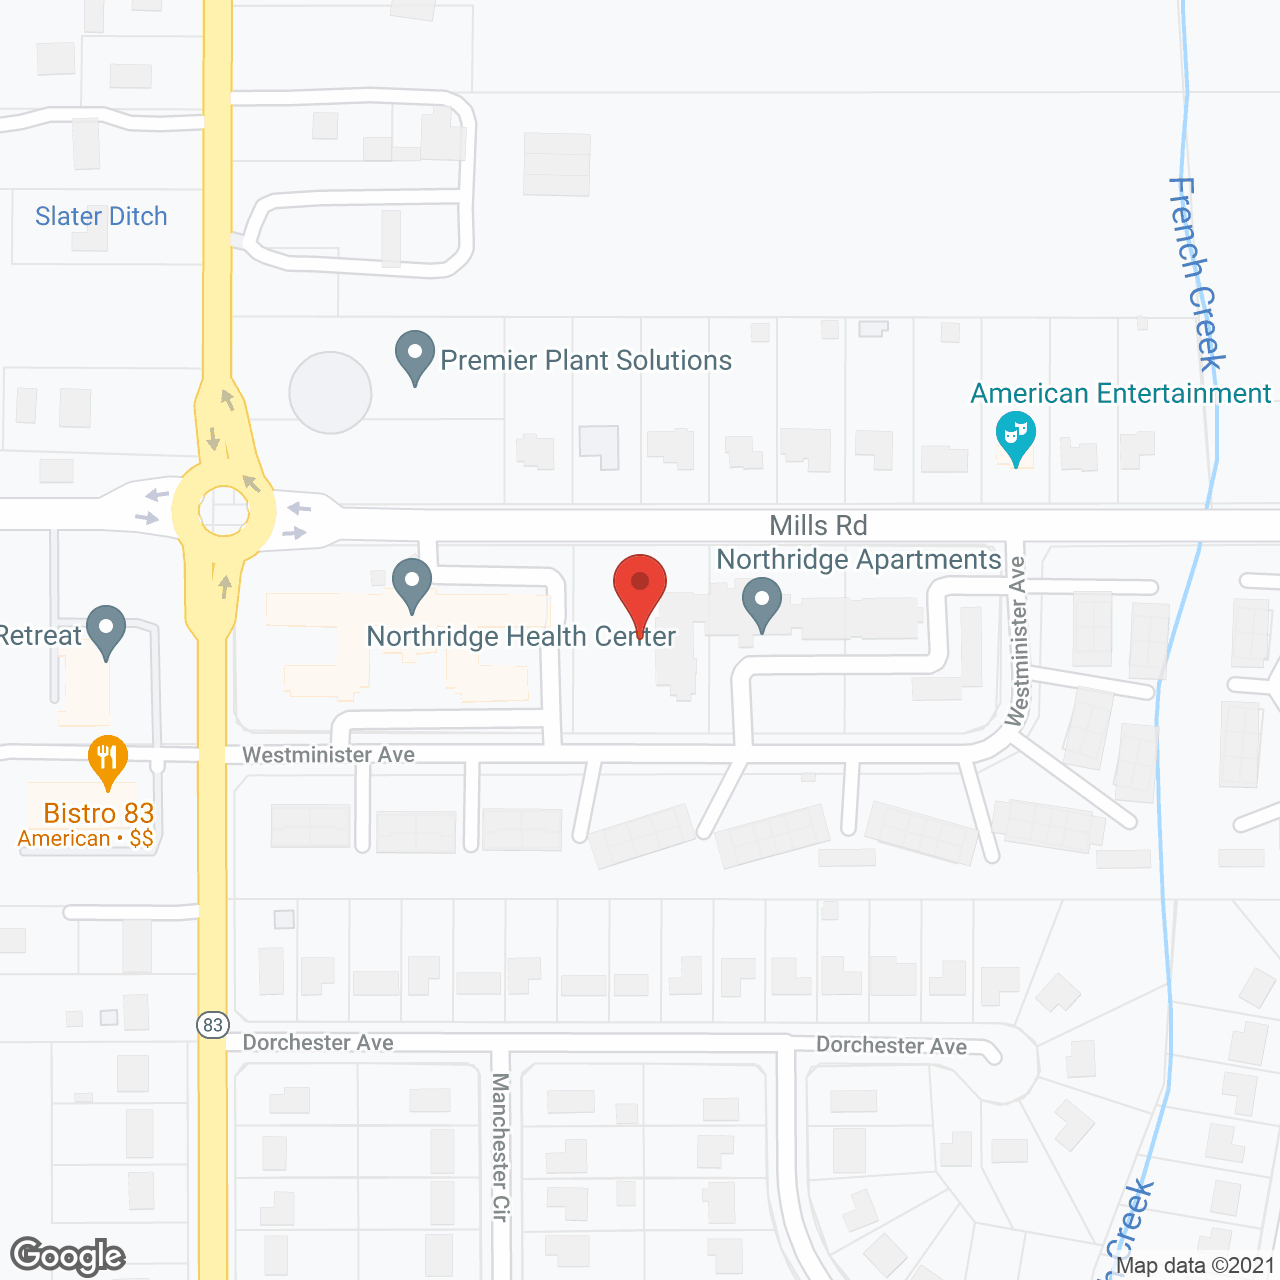 The Northridge Apartment in google map